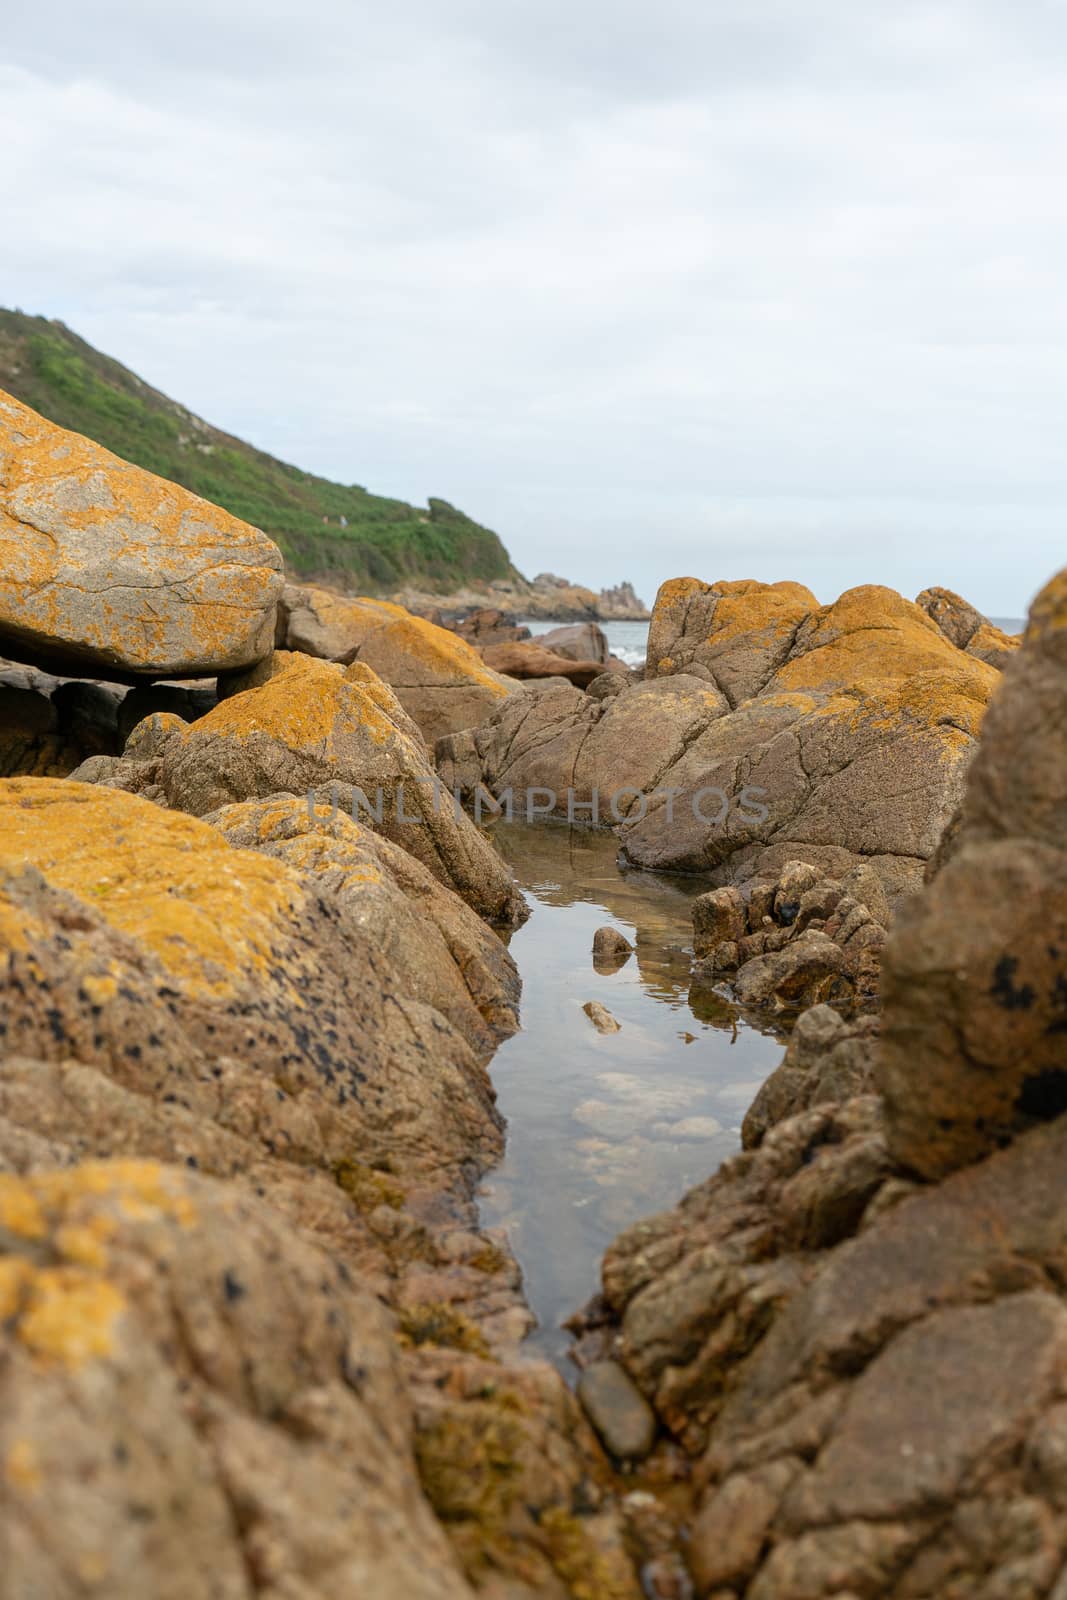 Rose granit sea shore in Britanny travel and hiking